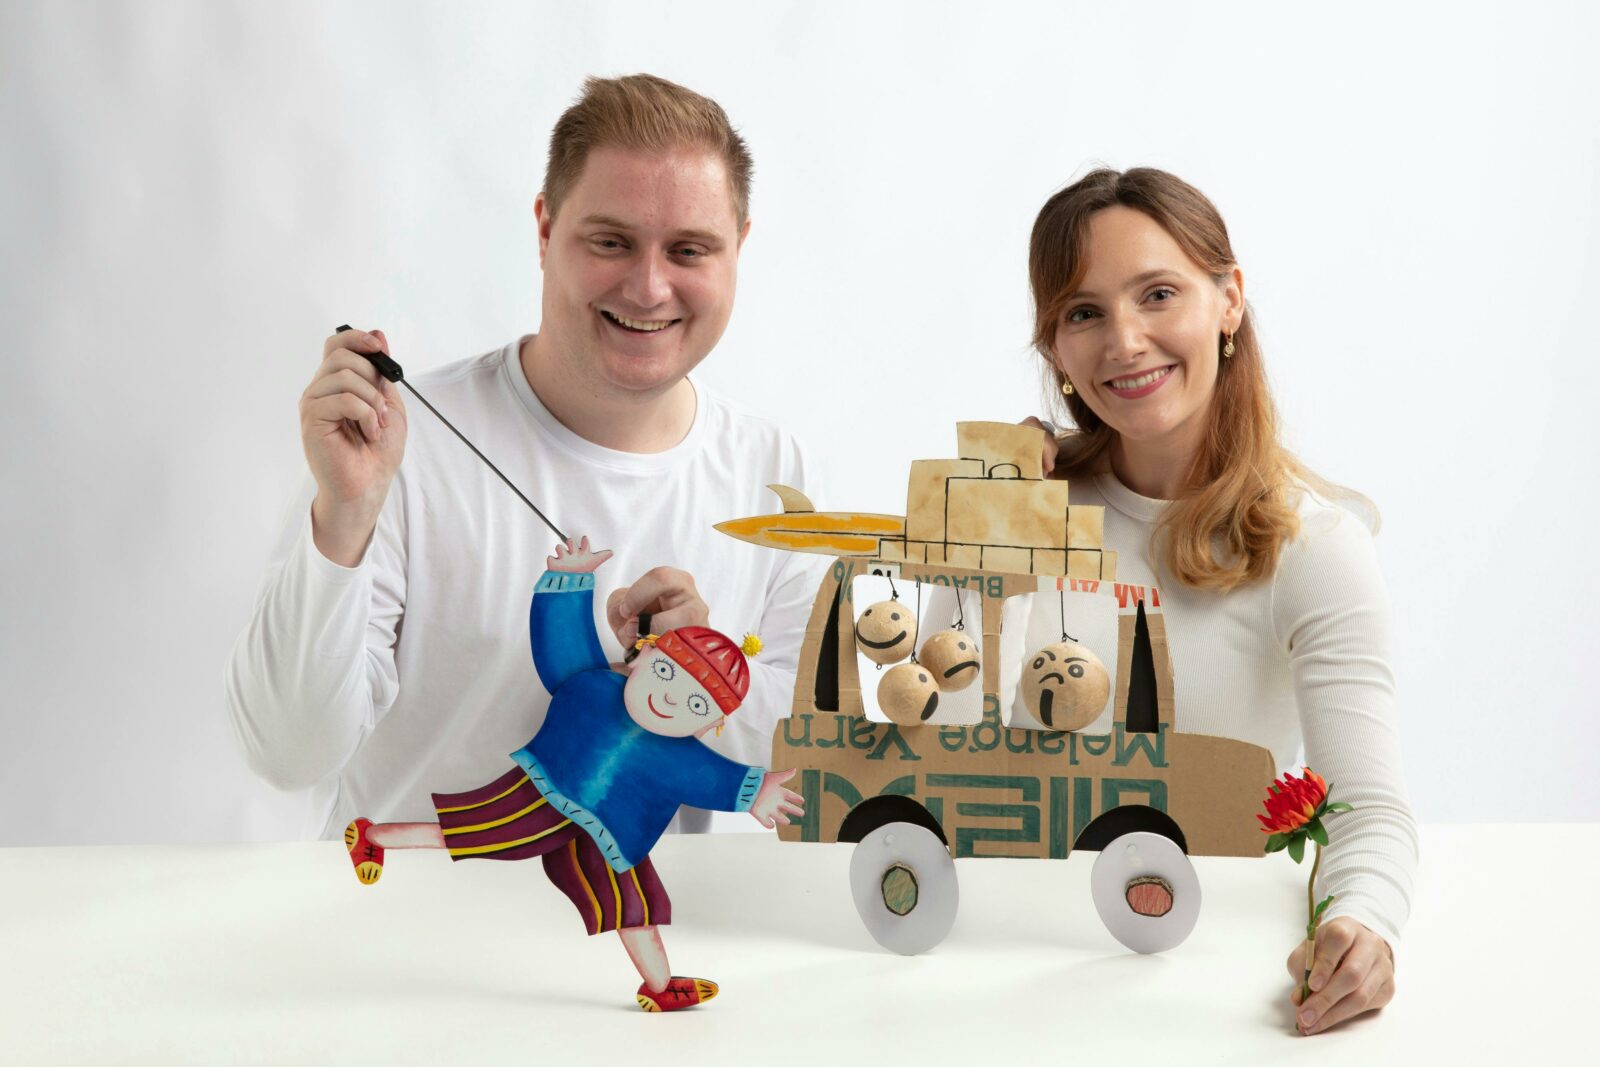 Manon Gunderson-Briggs Fabio Jaconelli pose with cutout puppets